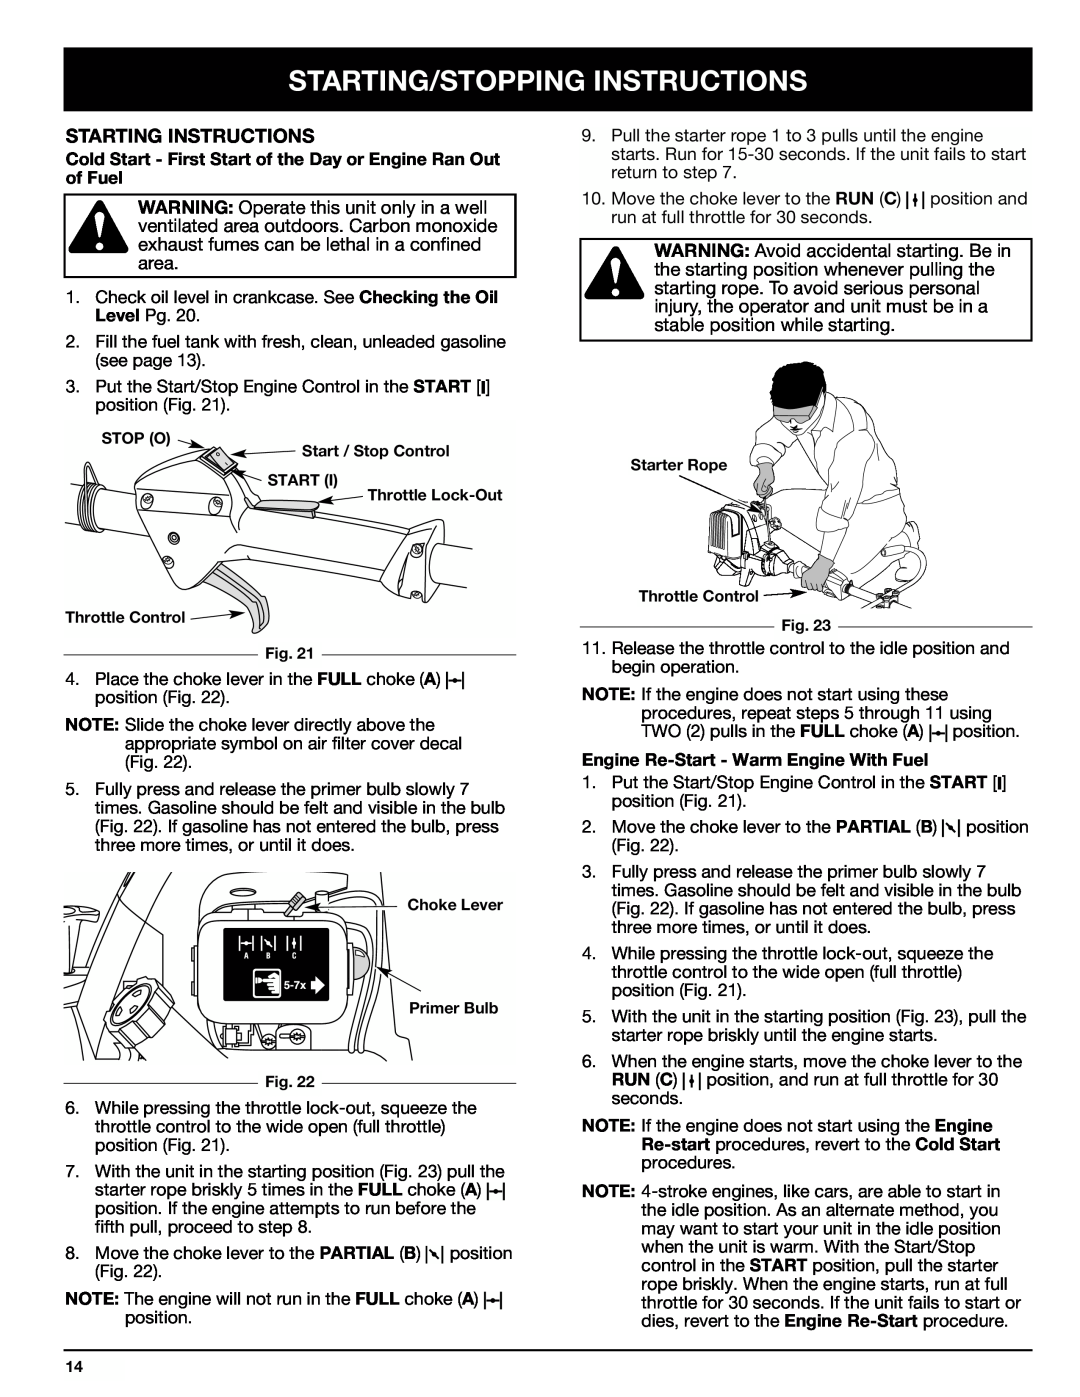 Ryobi 890r manual Starting/Stopping Instructions, Starting Instructions 